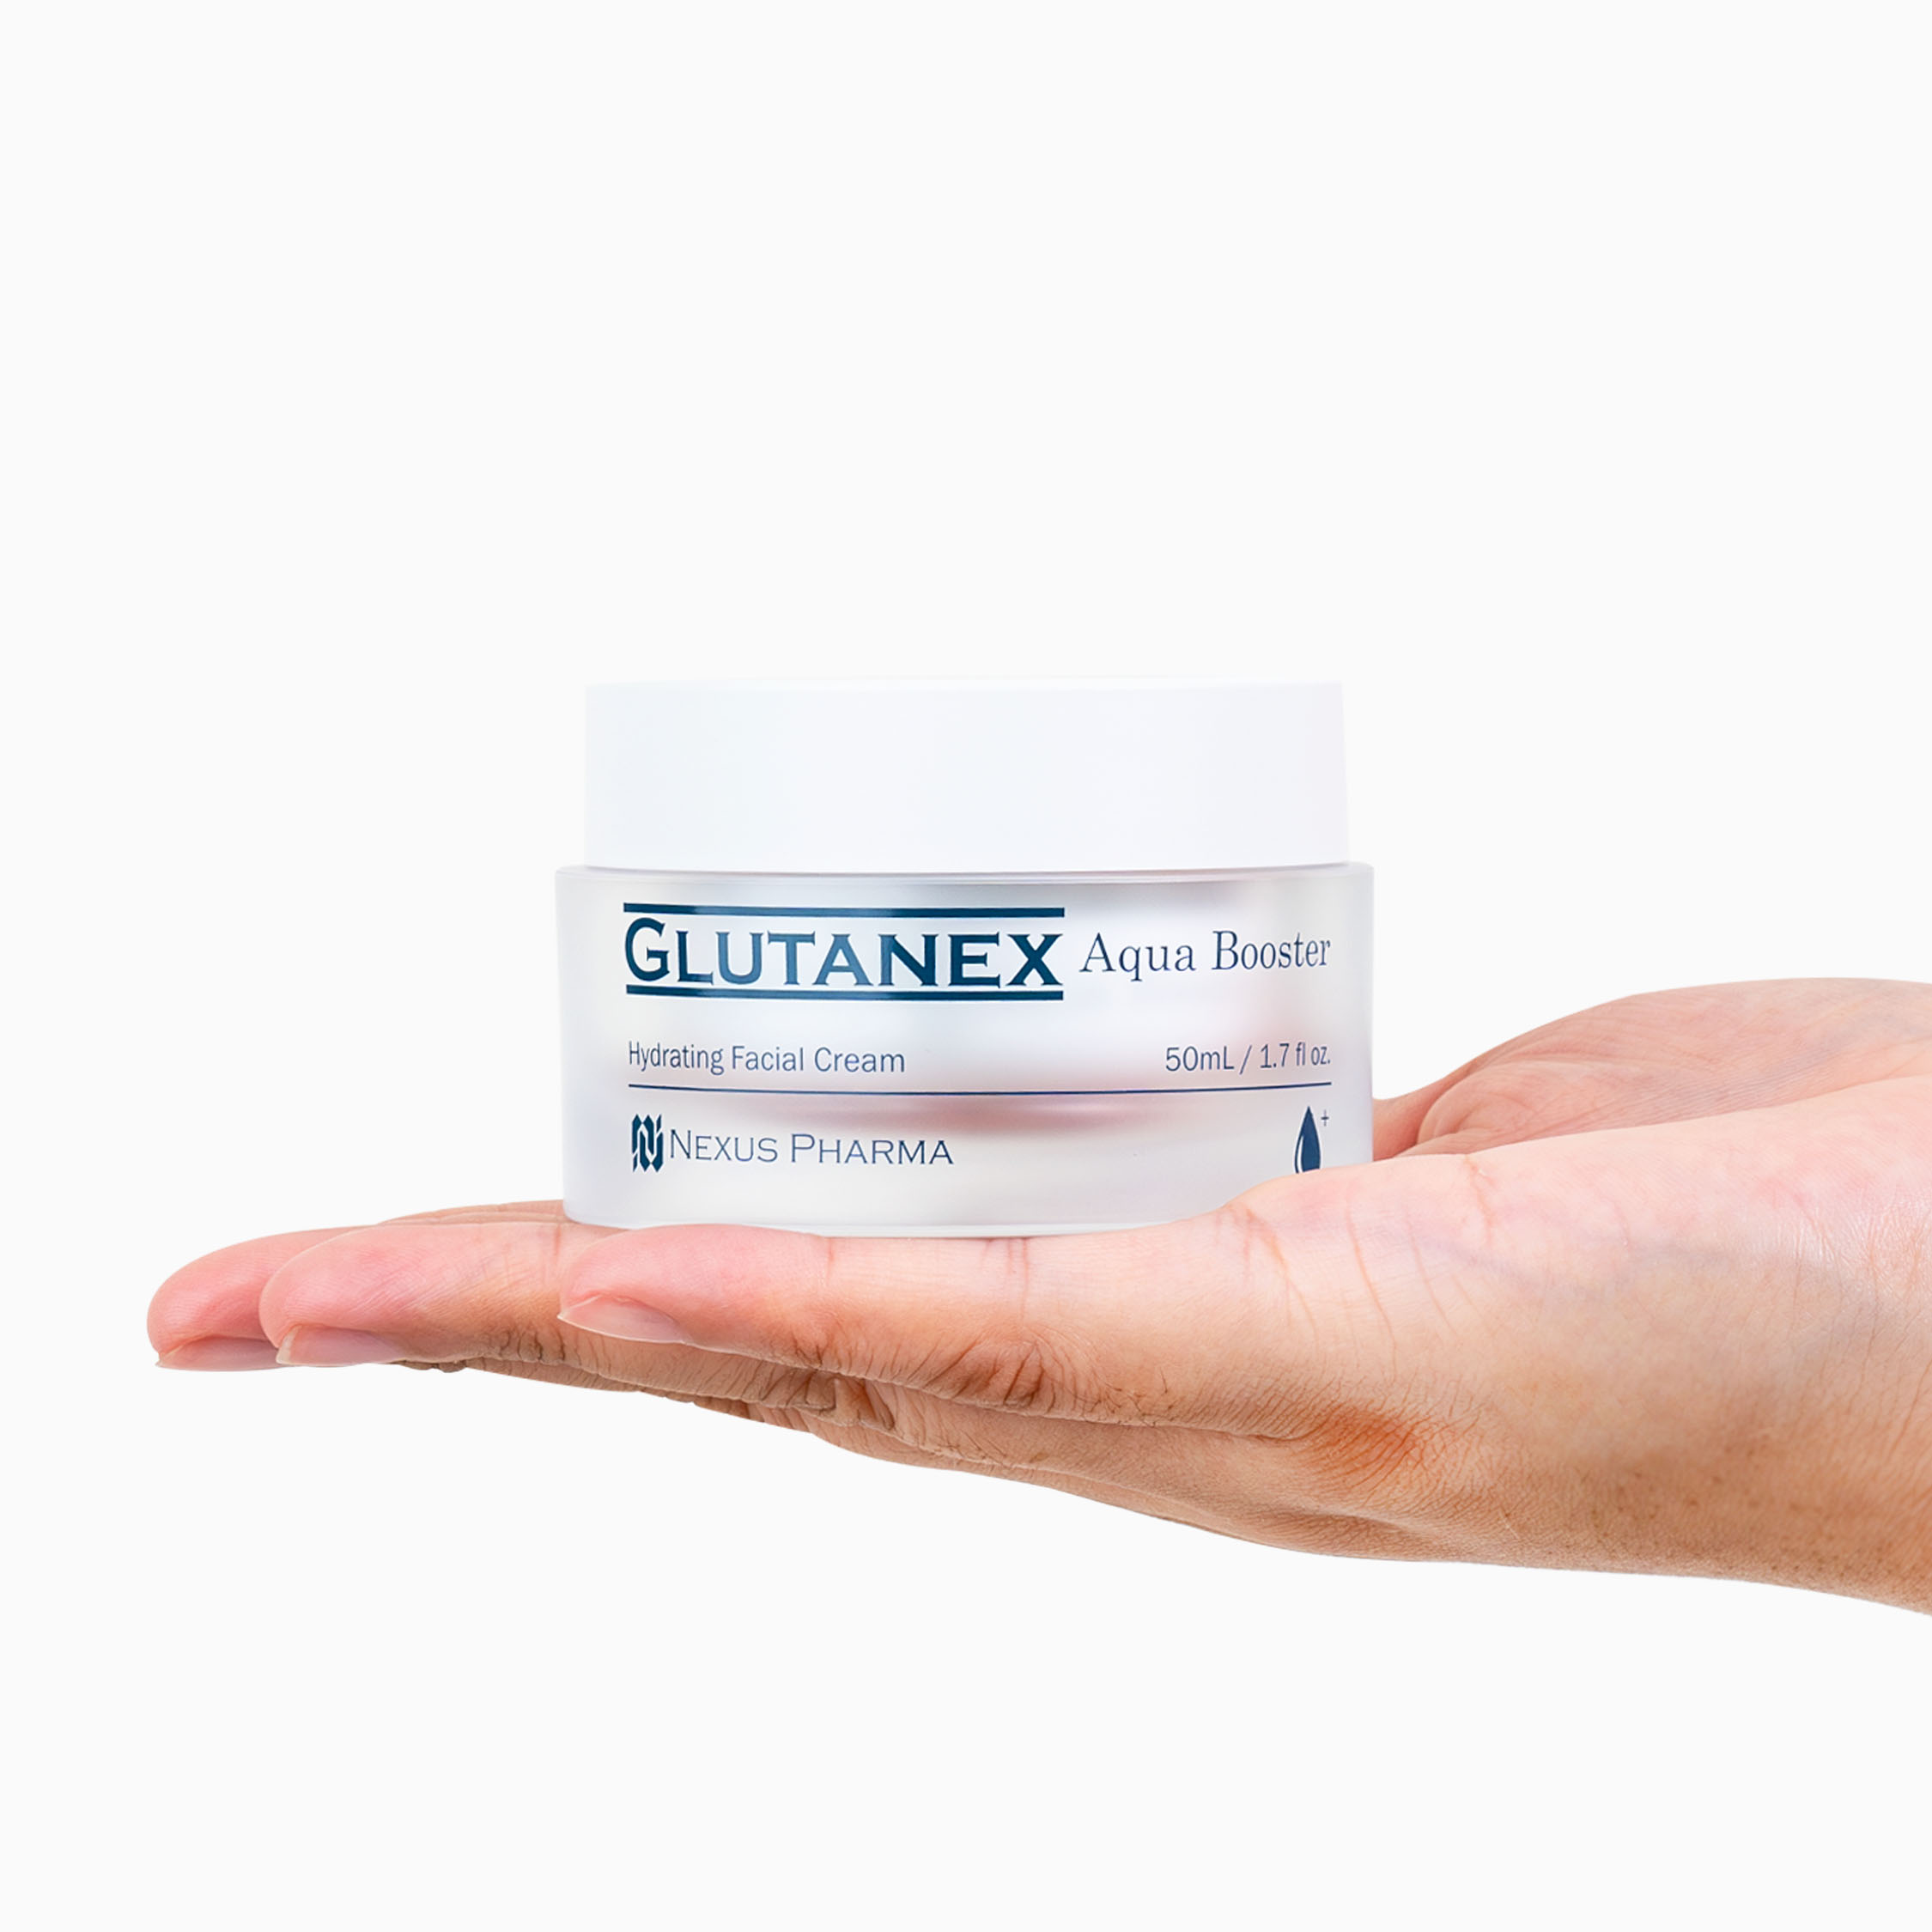 Holding a Glutanex Aqua Booster